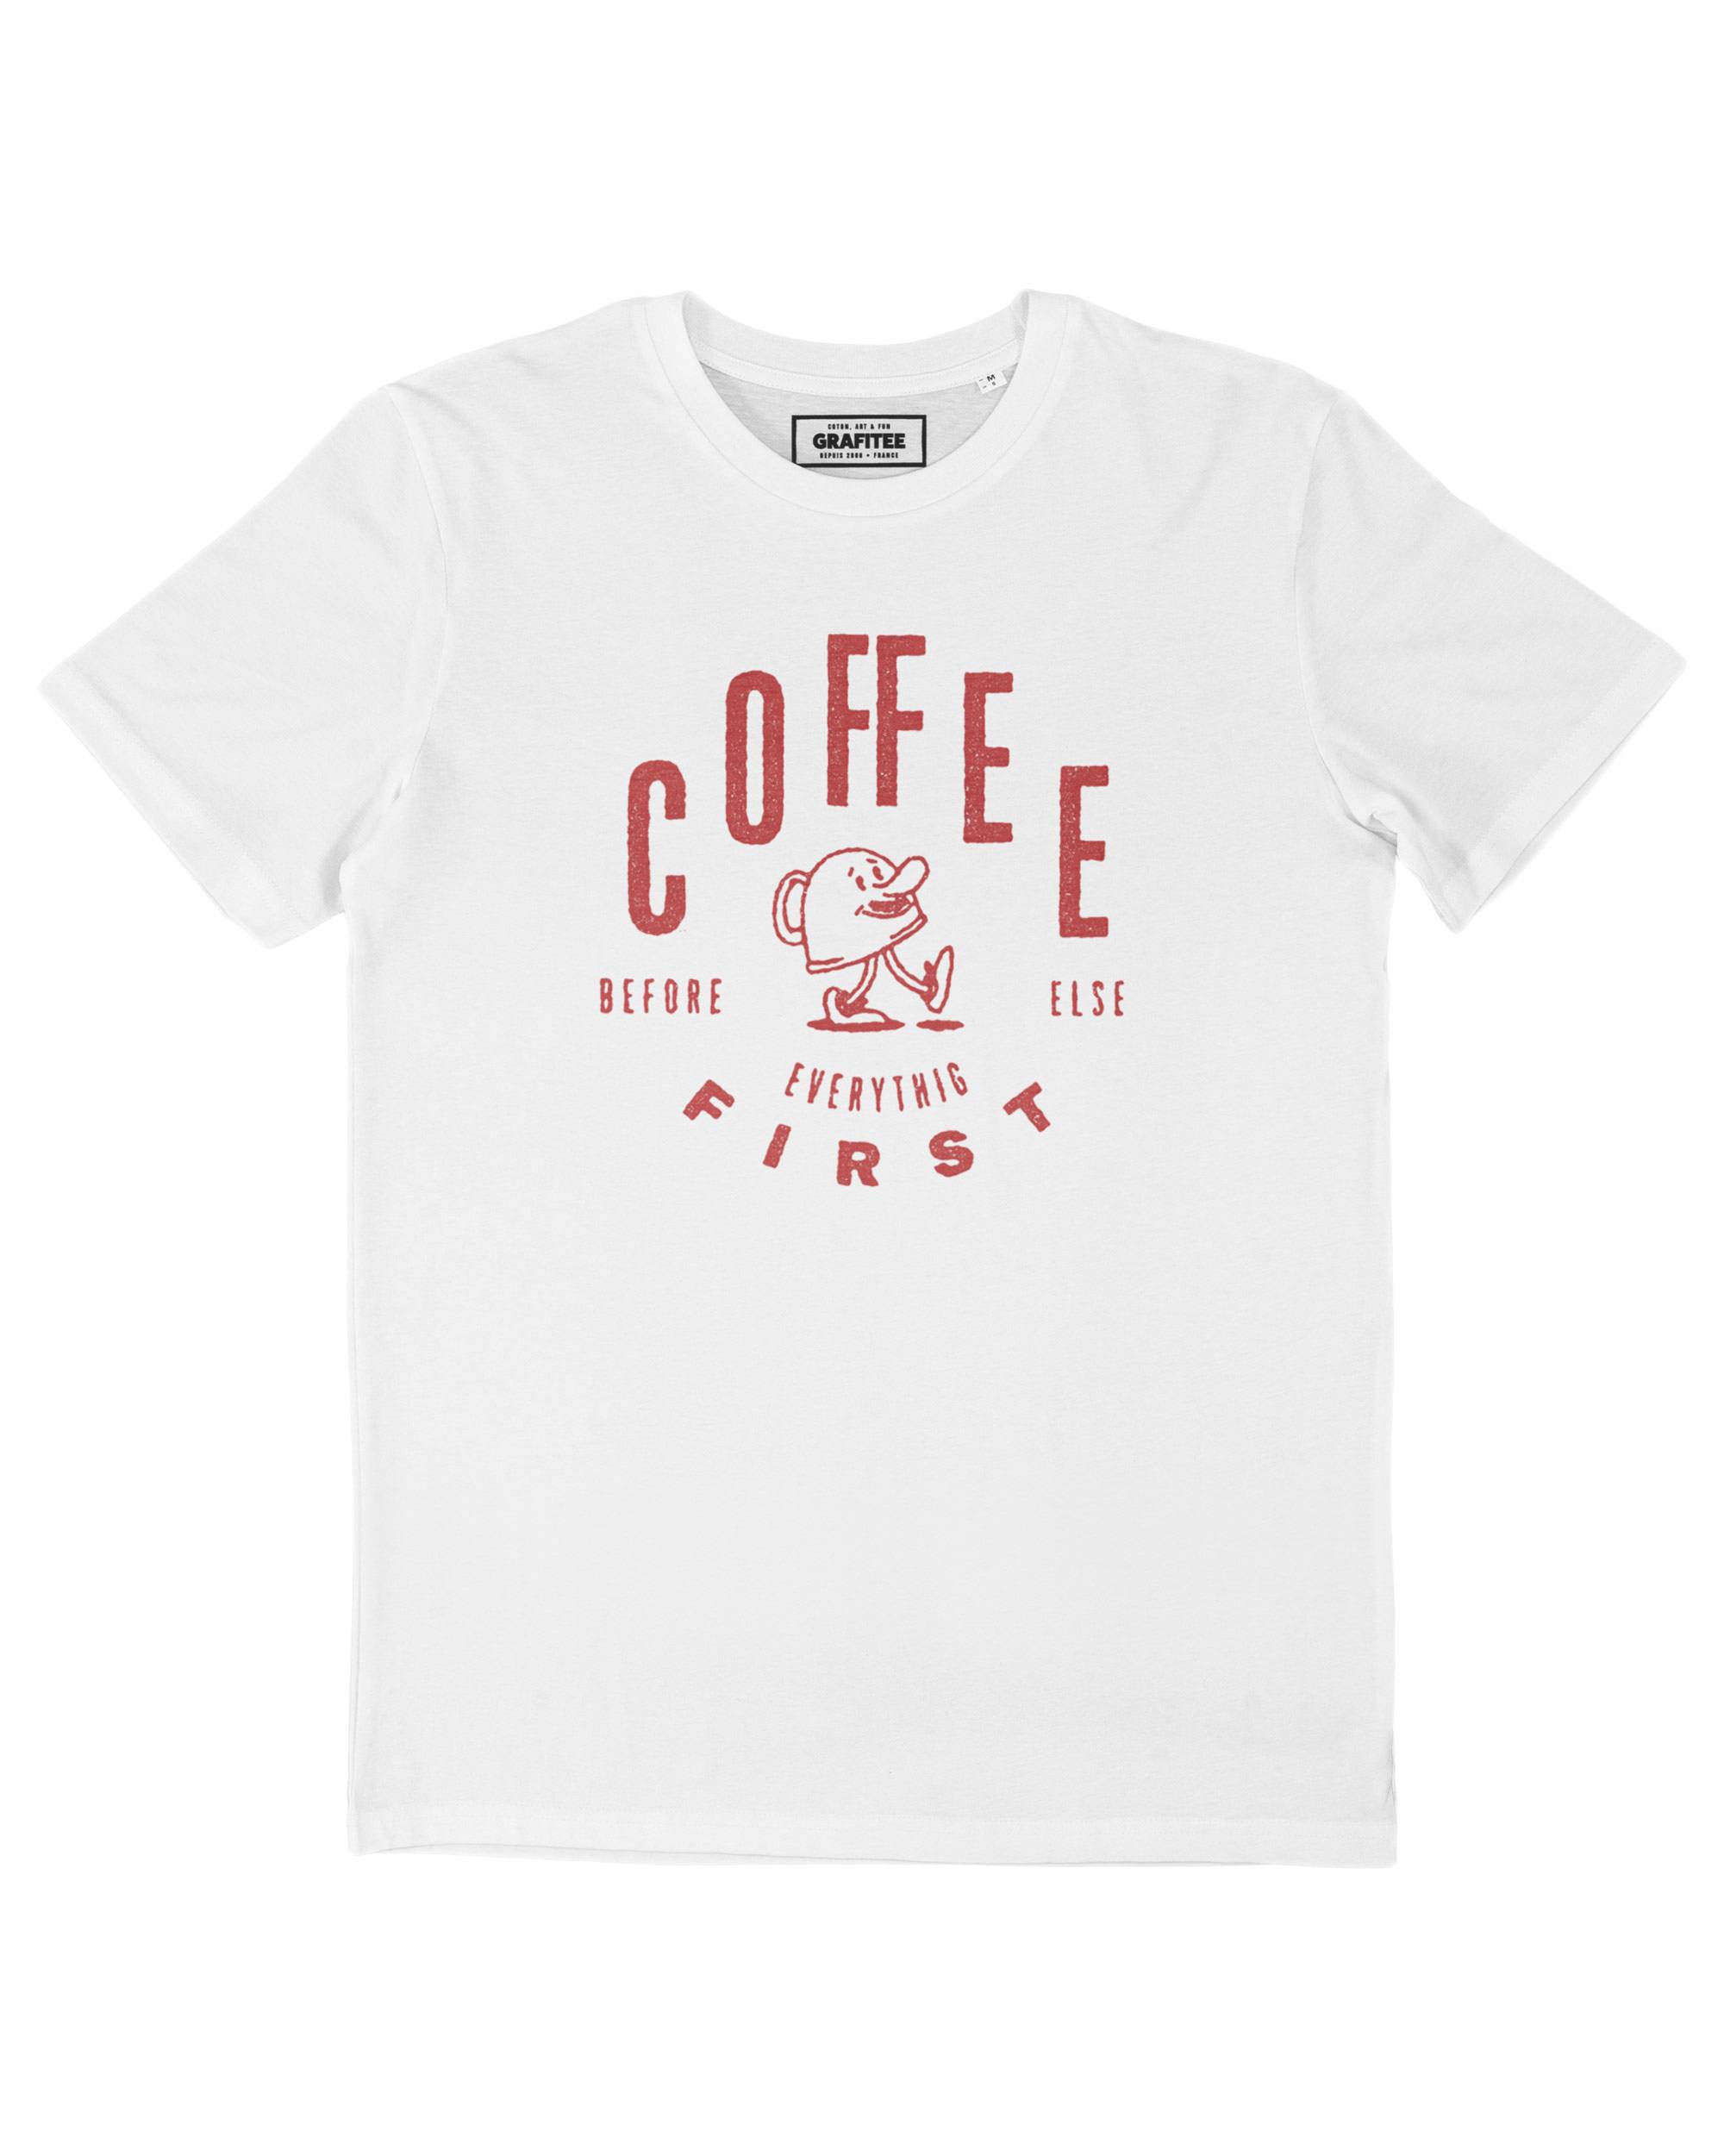 T-shirt First coffee Grafitee